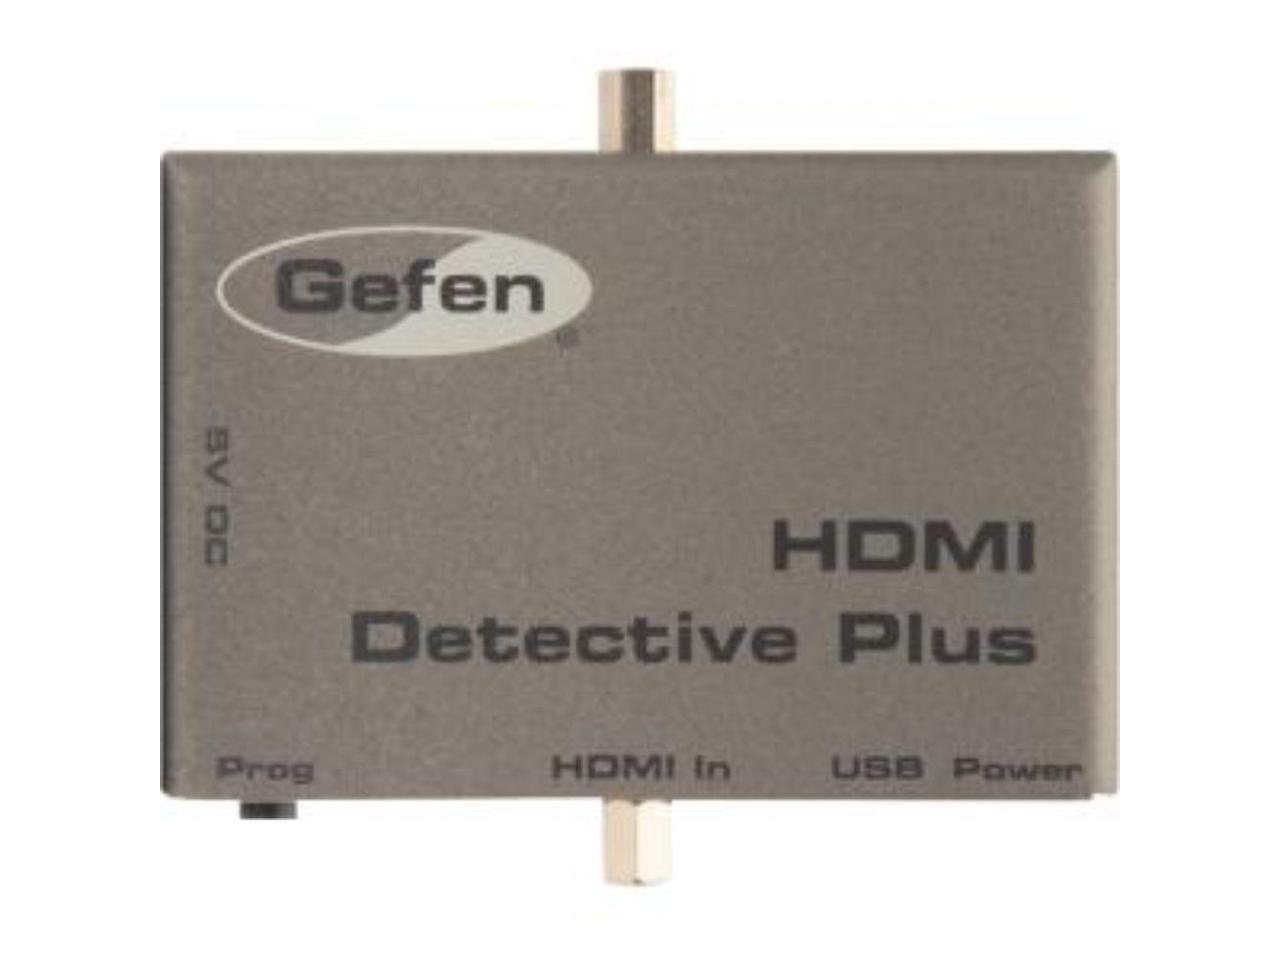 Gefen Hdmi Detective Plus - image 2 of 14